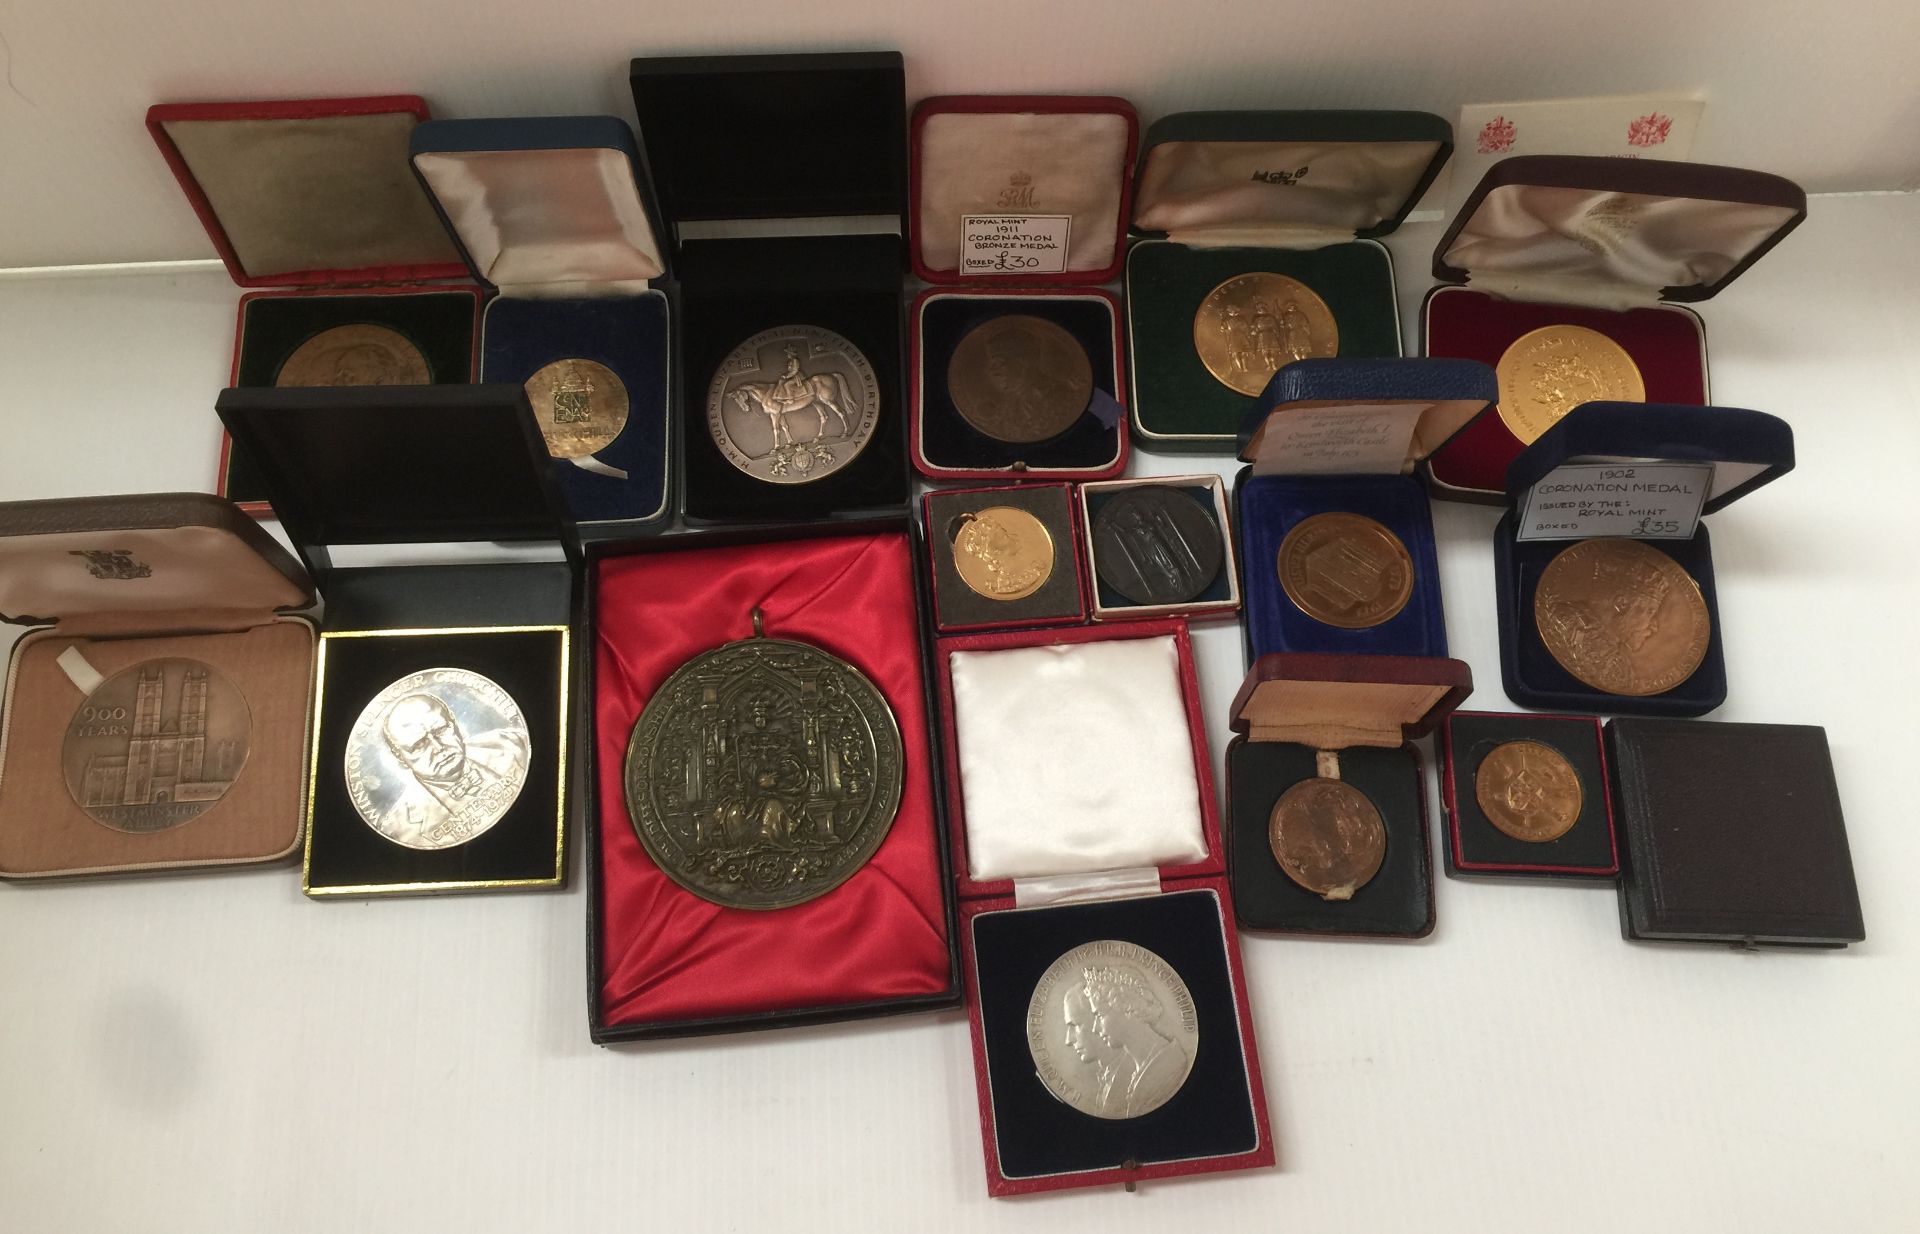 Seventeen medals - Churchill, royalty, Kenilworth Castle, Coronation medal,